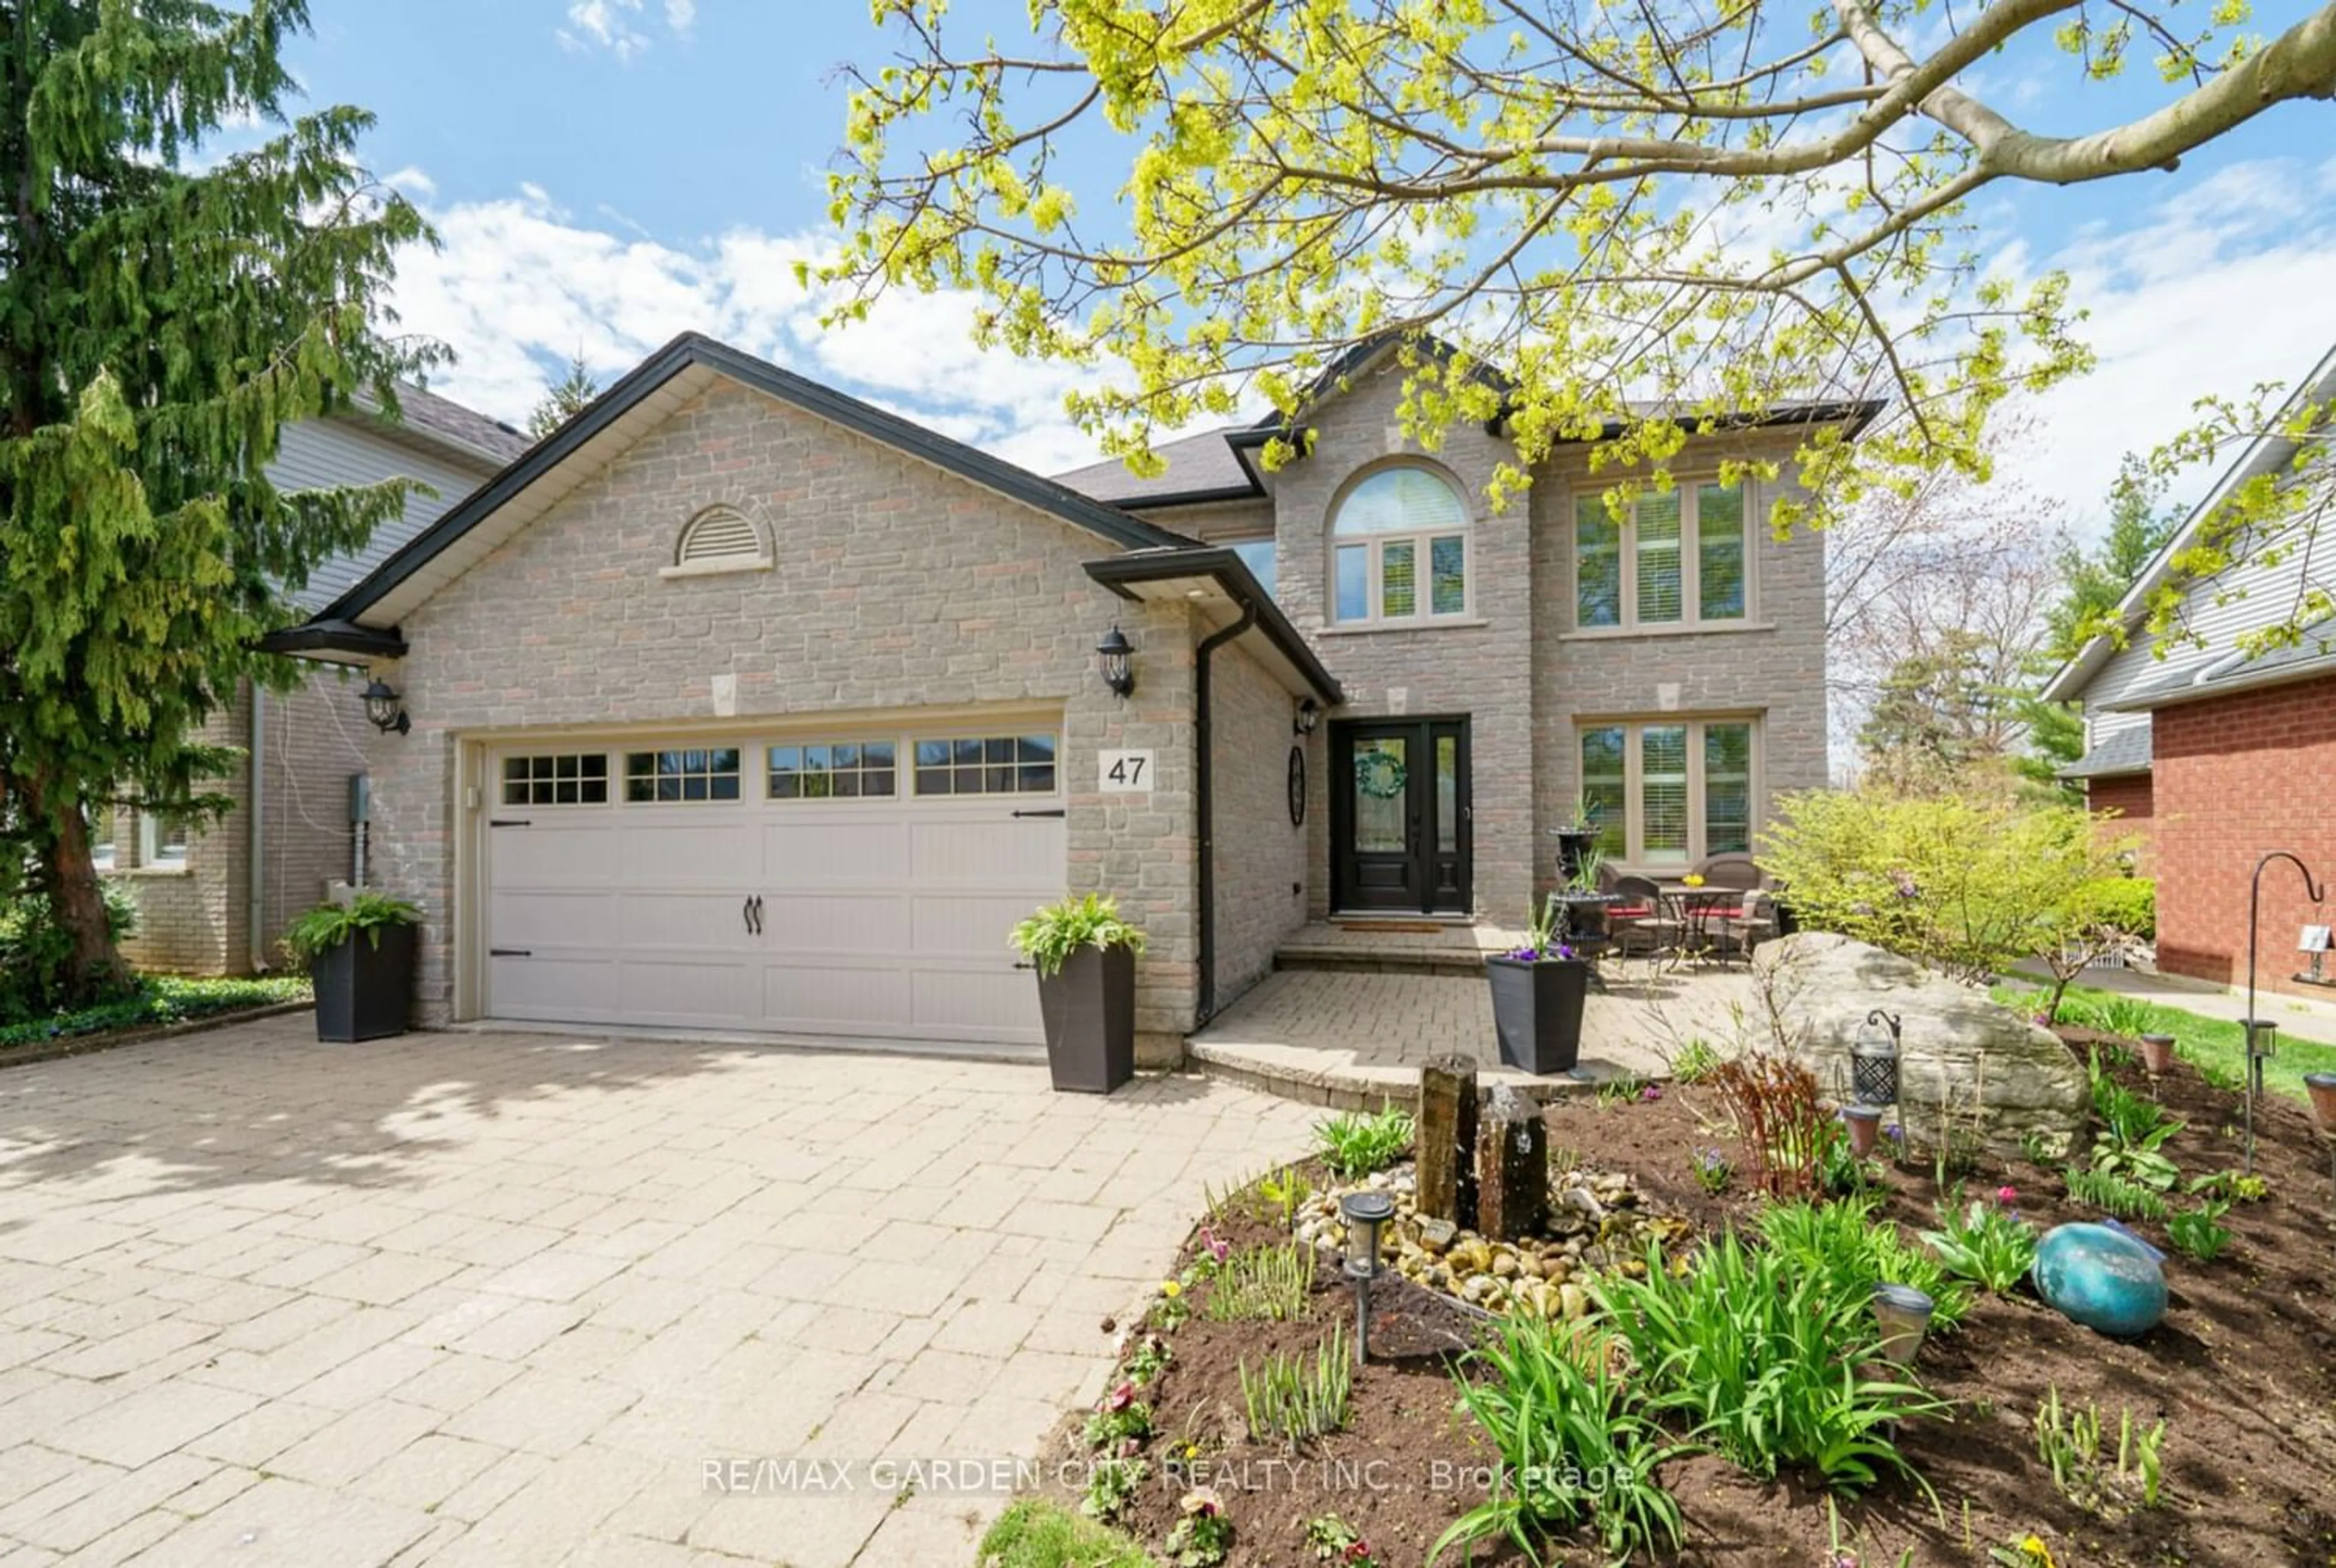 Home with brick exterior material for 47 Richmond Cres, Hamilton Ontario L8E 5T9